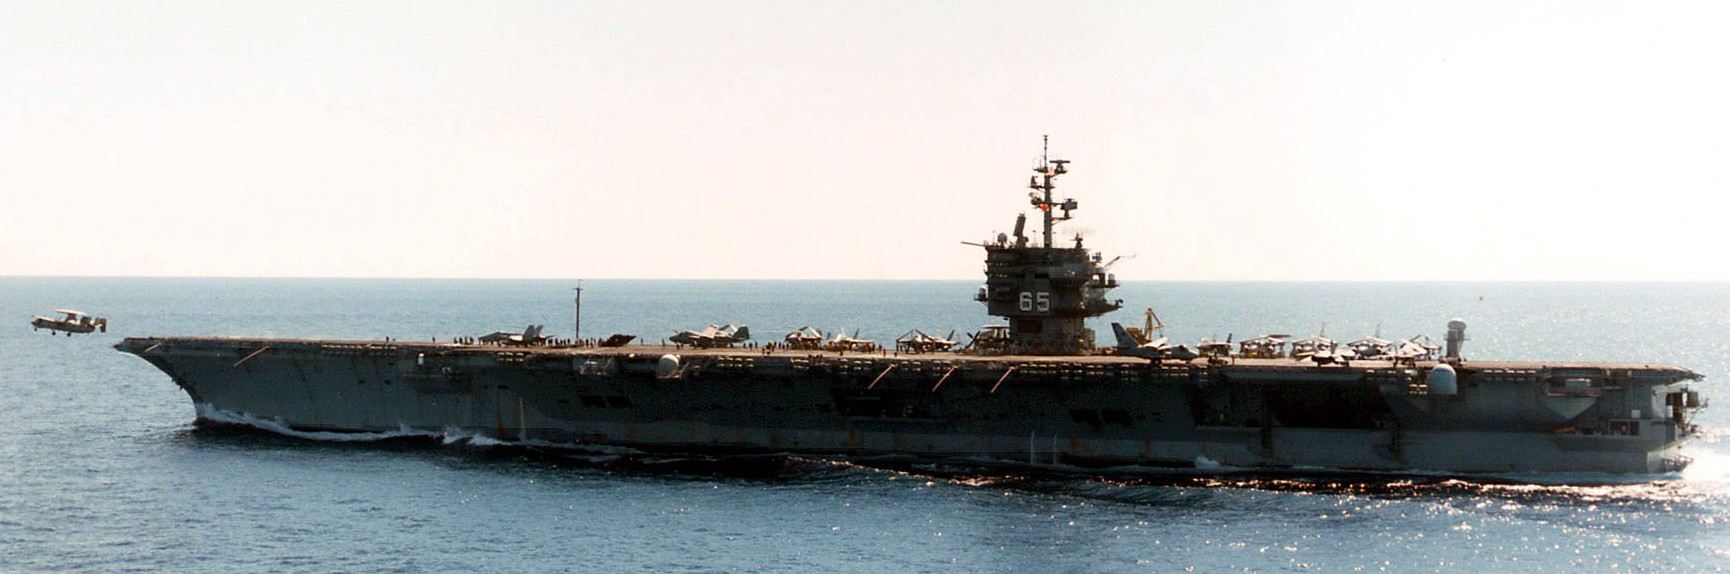 cvn-65 uss enterprise aircraft carrier air wing cvw-17 us navy adriatic sea 1996 86